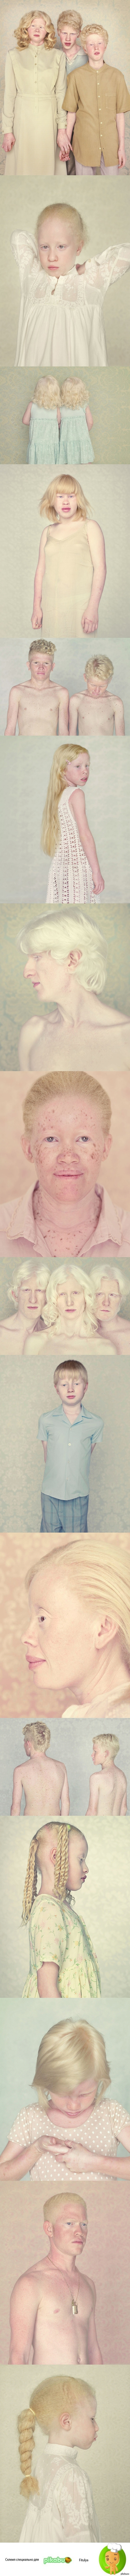 Albinos (long post) - Images, Longpost, Albino, People